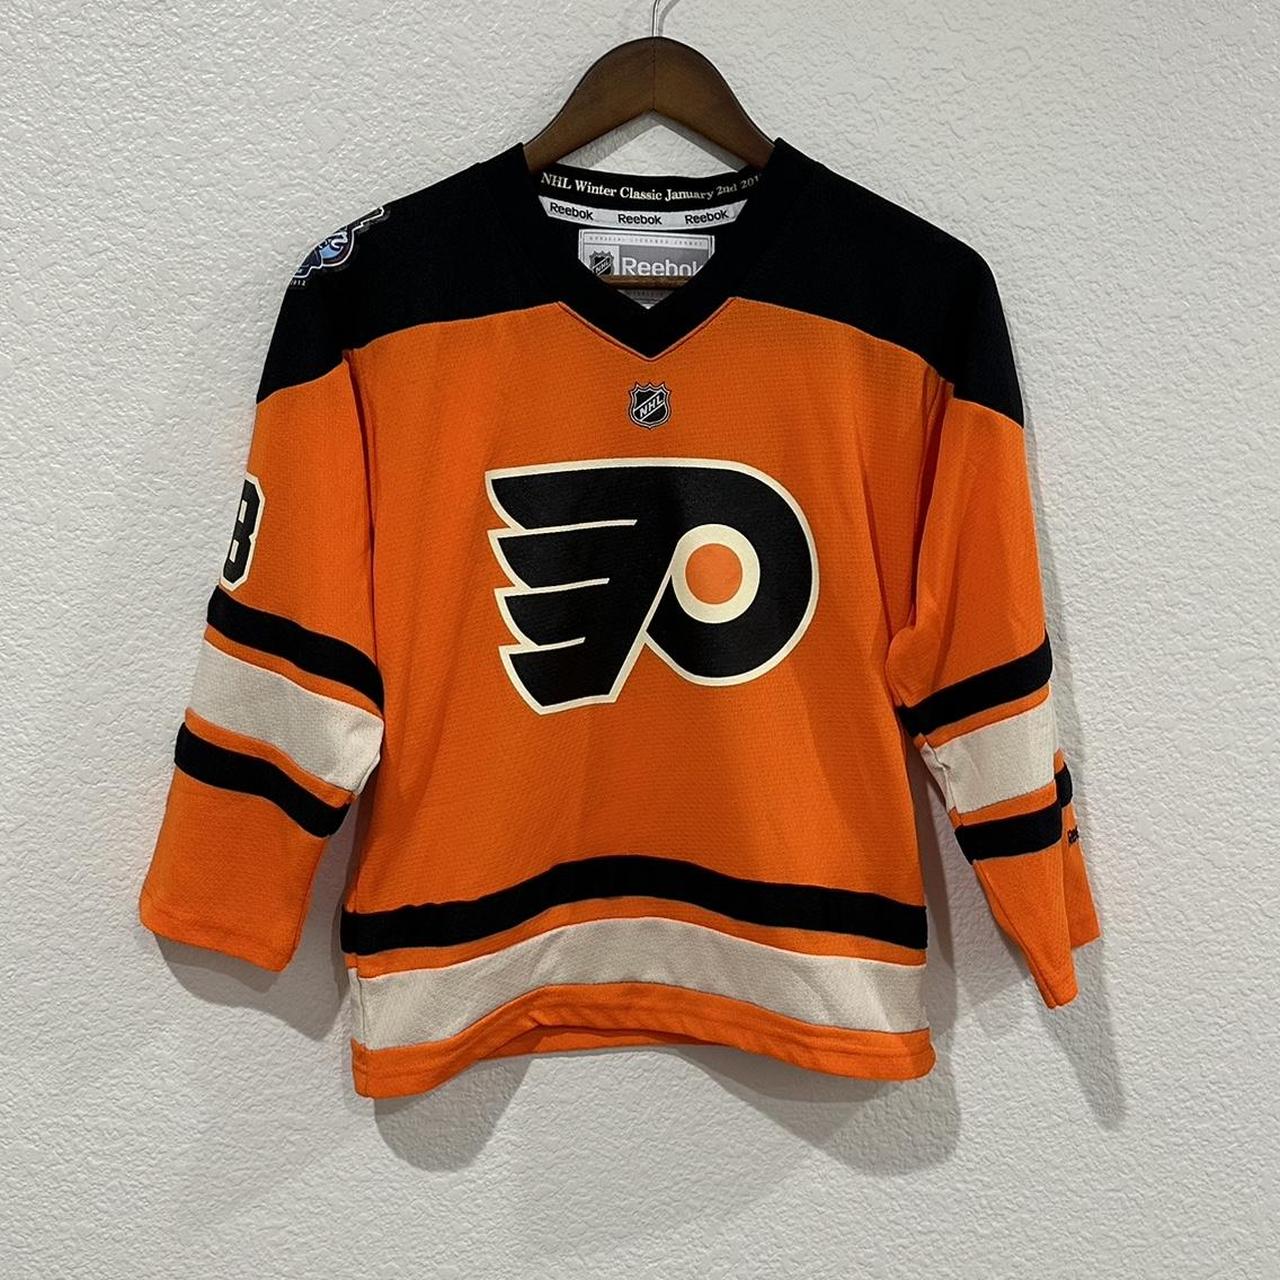 Claude Giroux Philadelphia Flyers Jersey orange